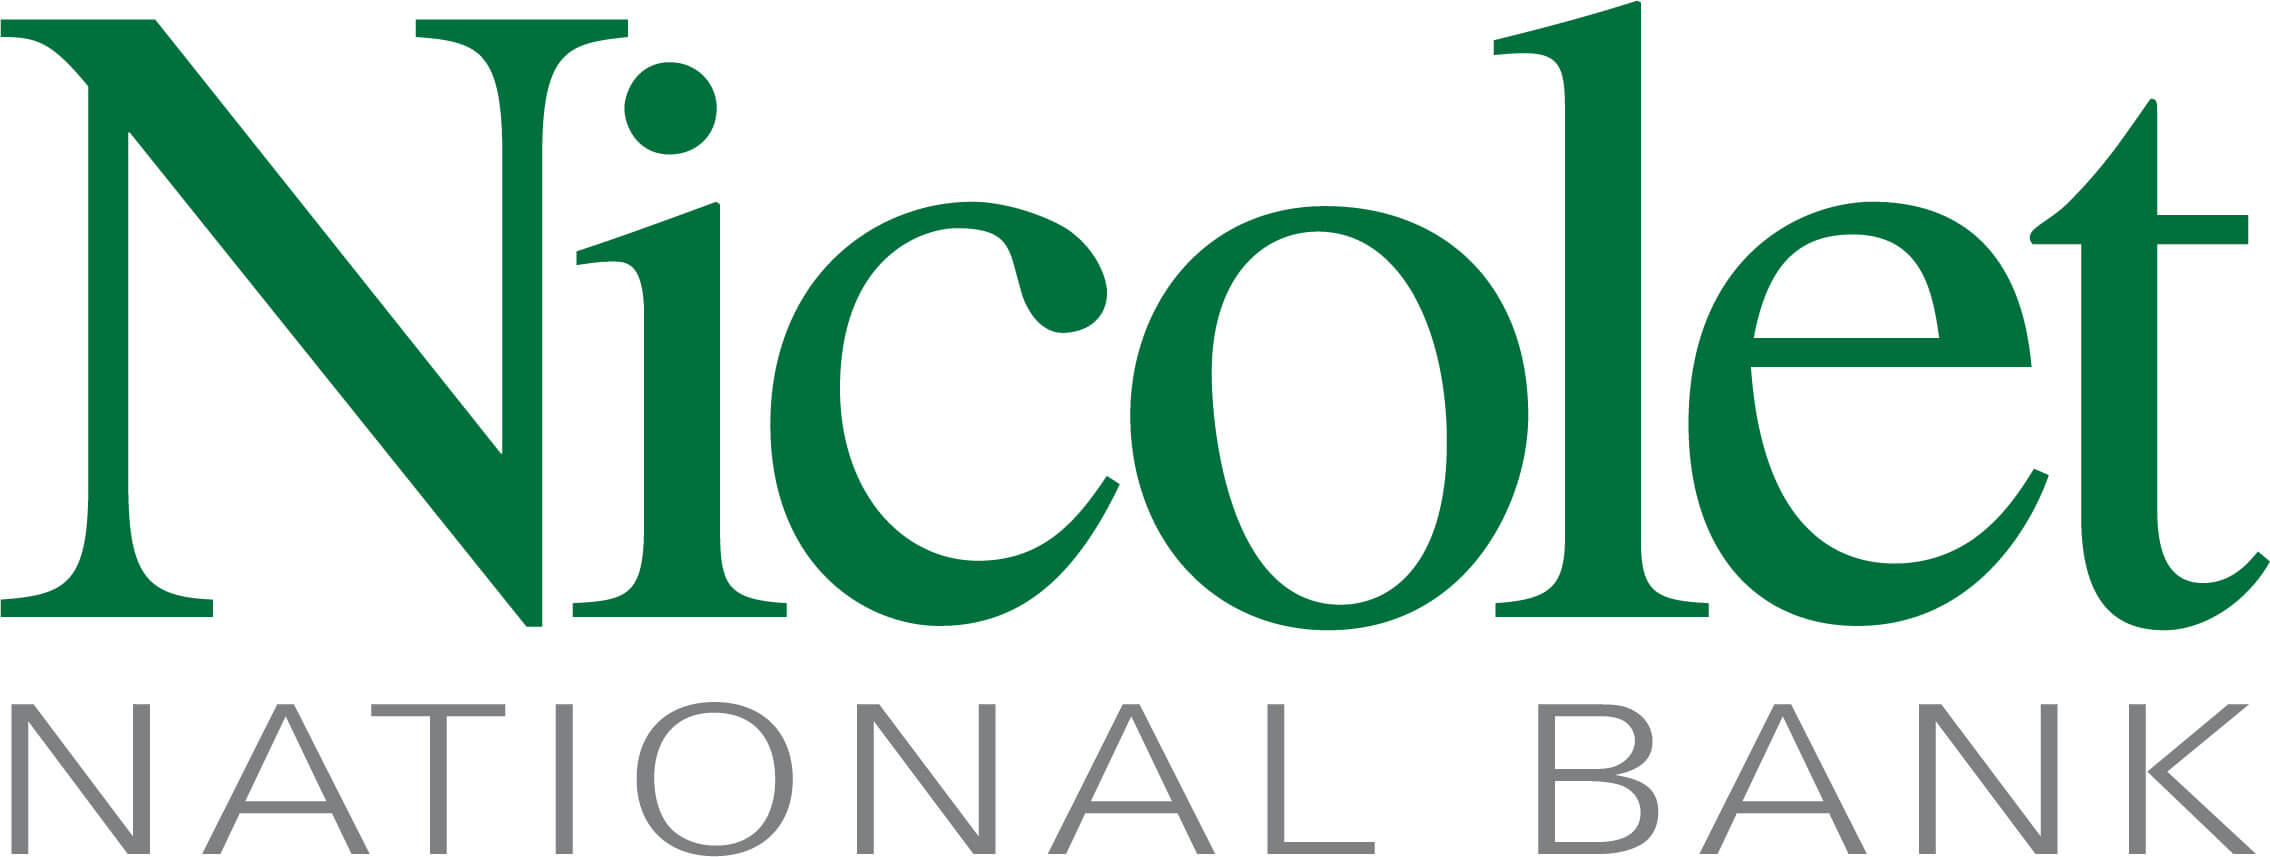 Nicolet Logo 349 2c PMS JPEG